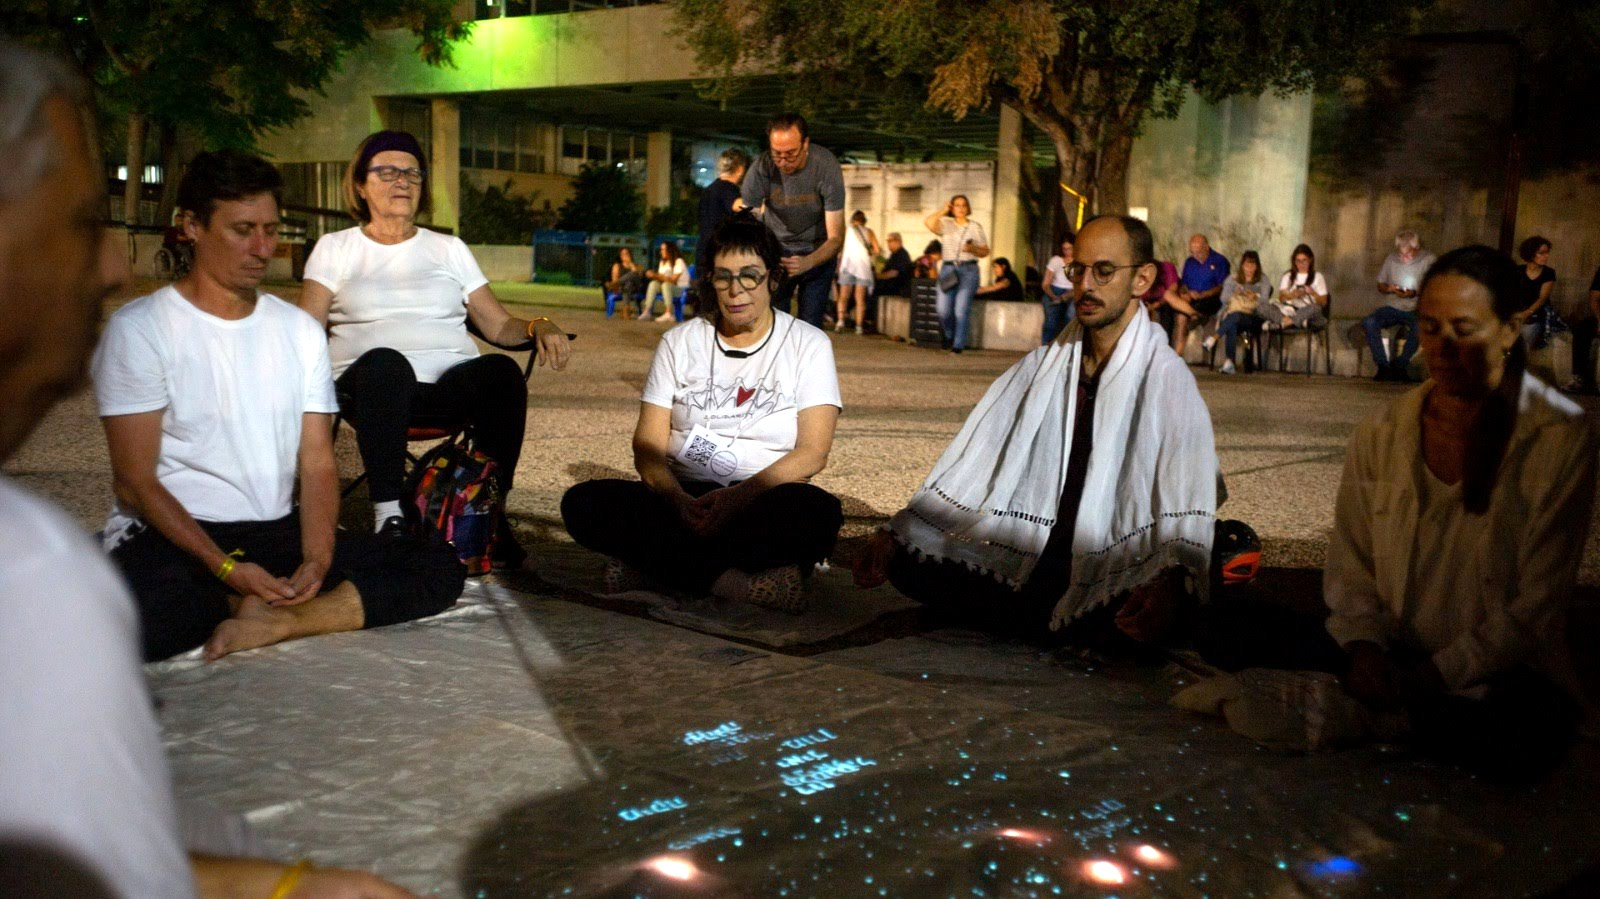 A meditation circle around the installation at the hostage vigil at Tel Aviv Museum square